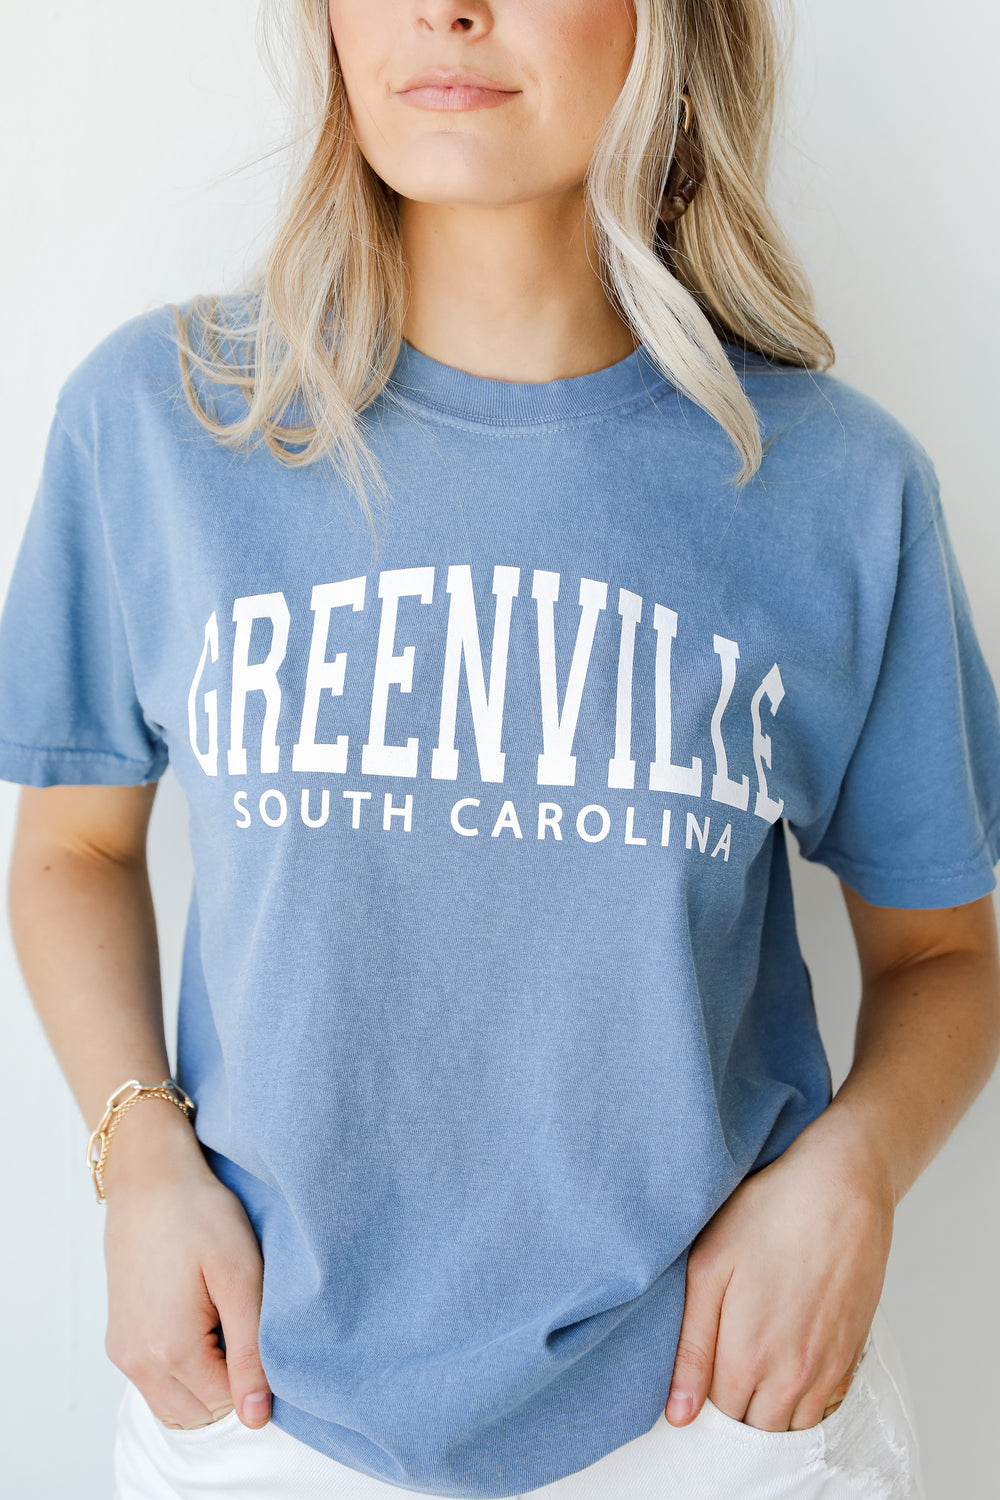 Blue Greenville South Carolina from dress up